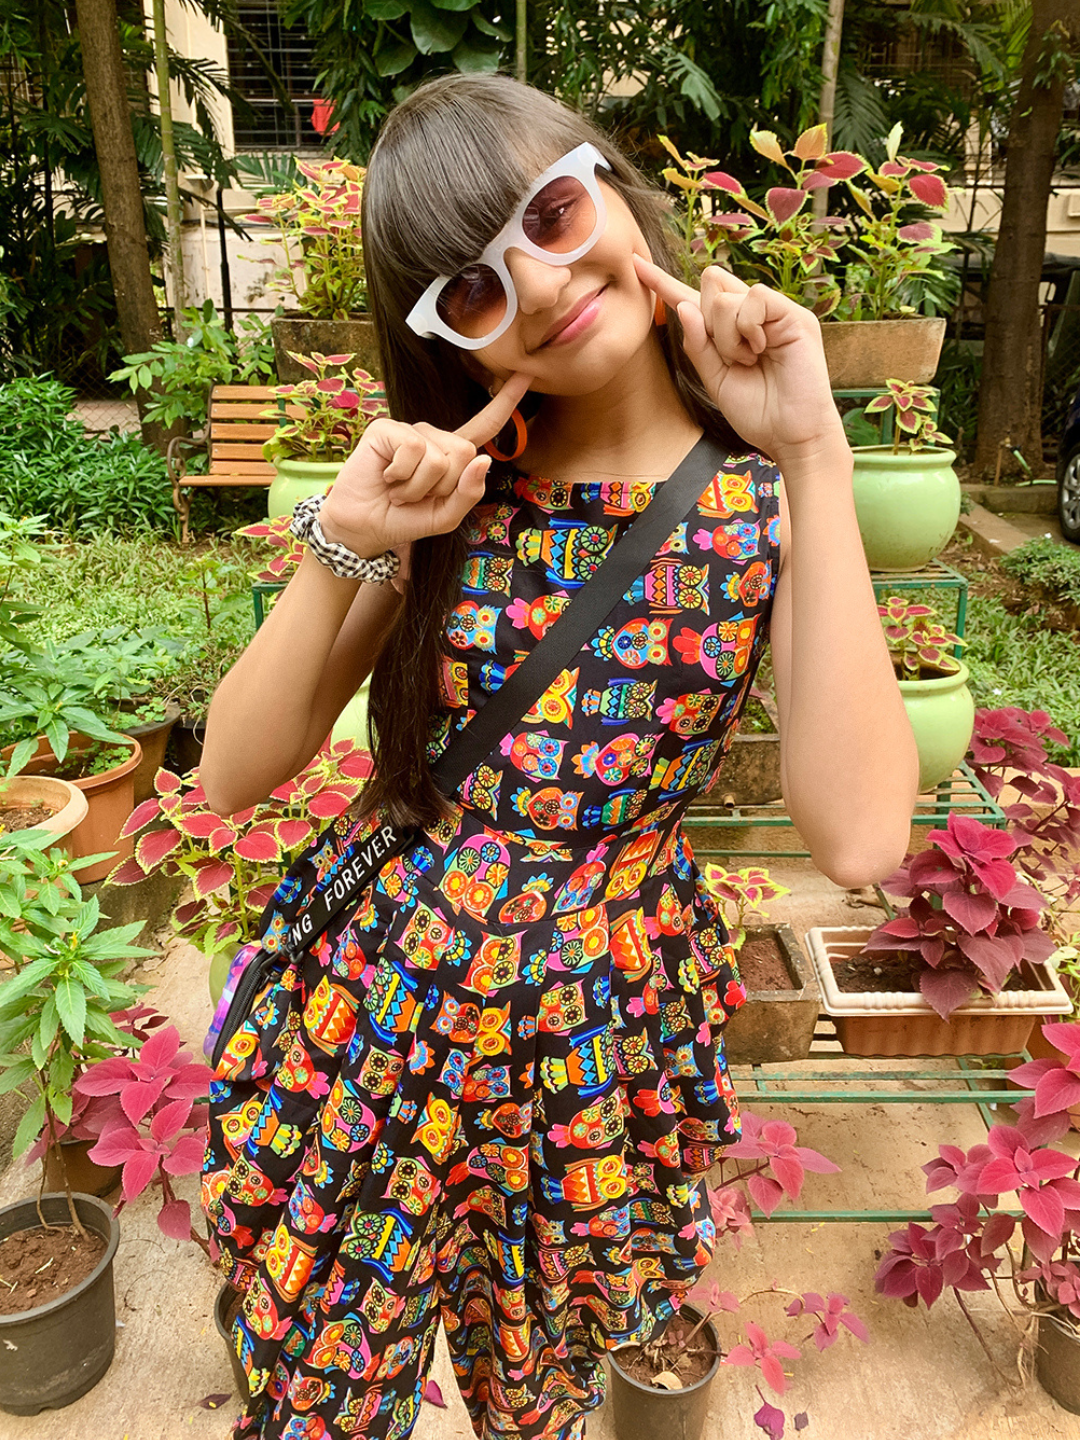 Elasticated Polka Print Dhoti Jumpsuit for Girls - Uptownie